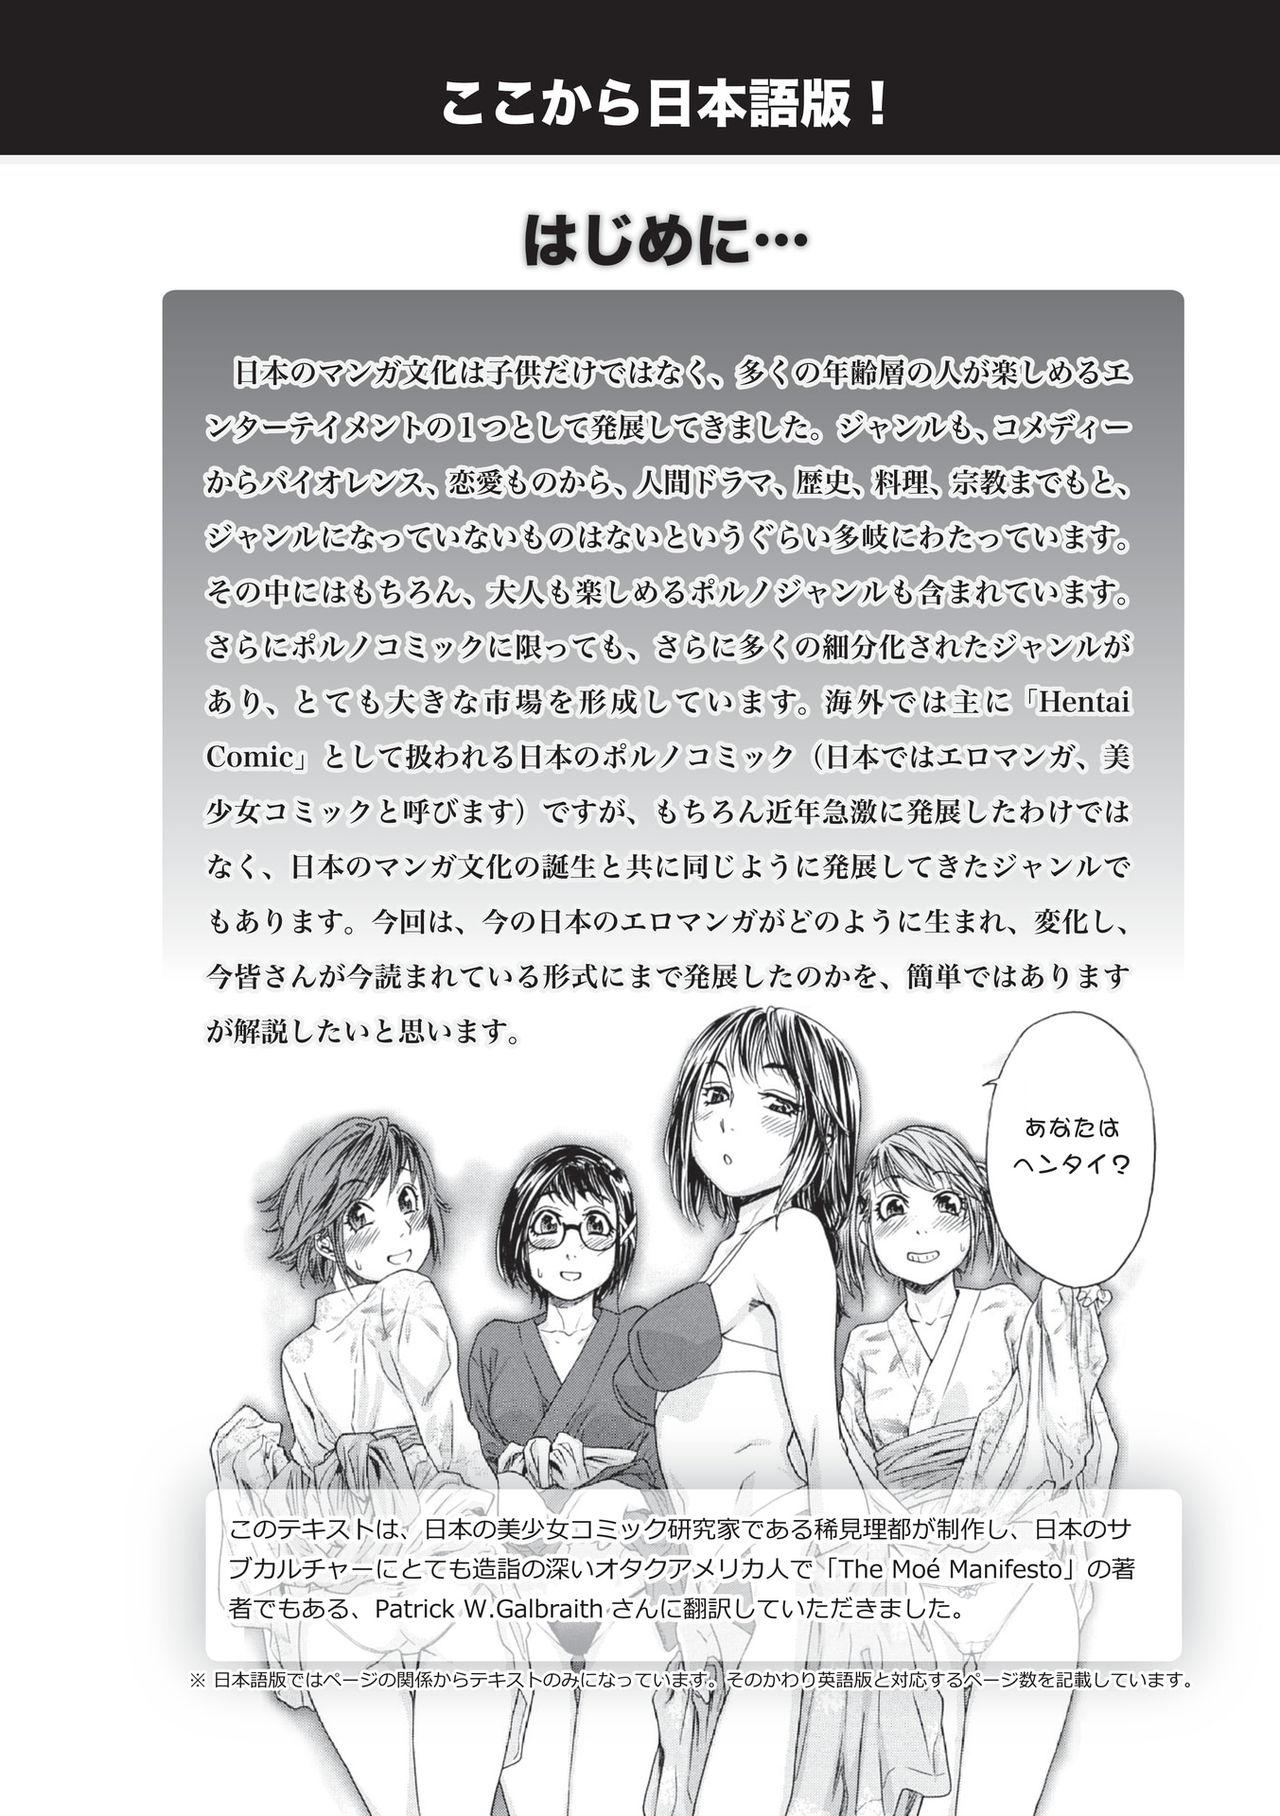 Hentai Manga! A Brief History of Pornographic Comics in Japan 23